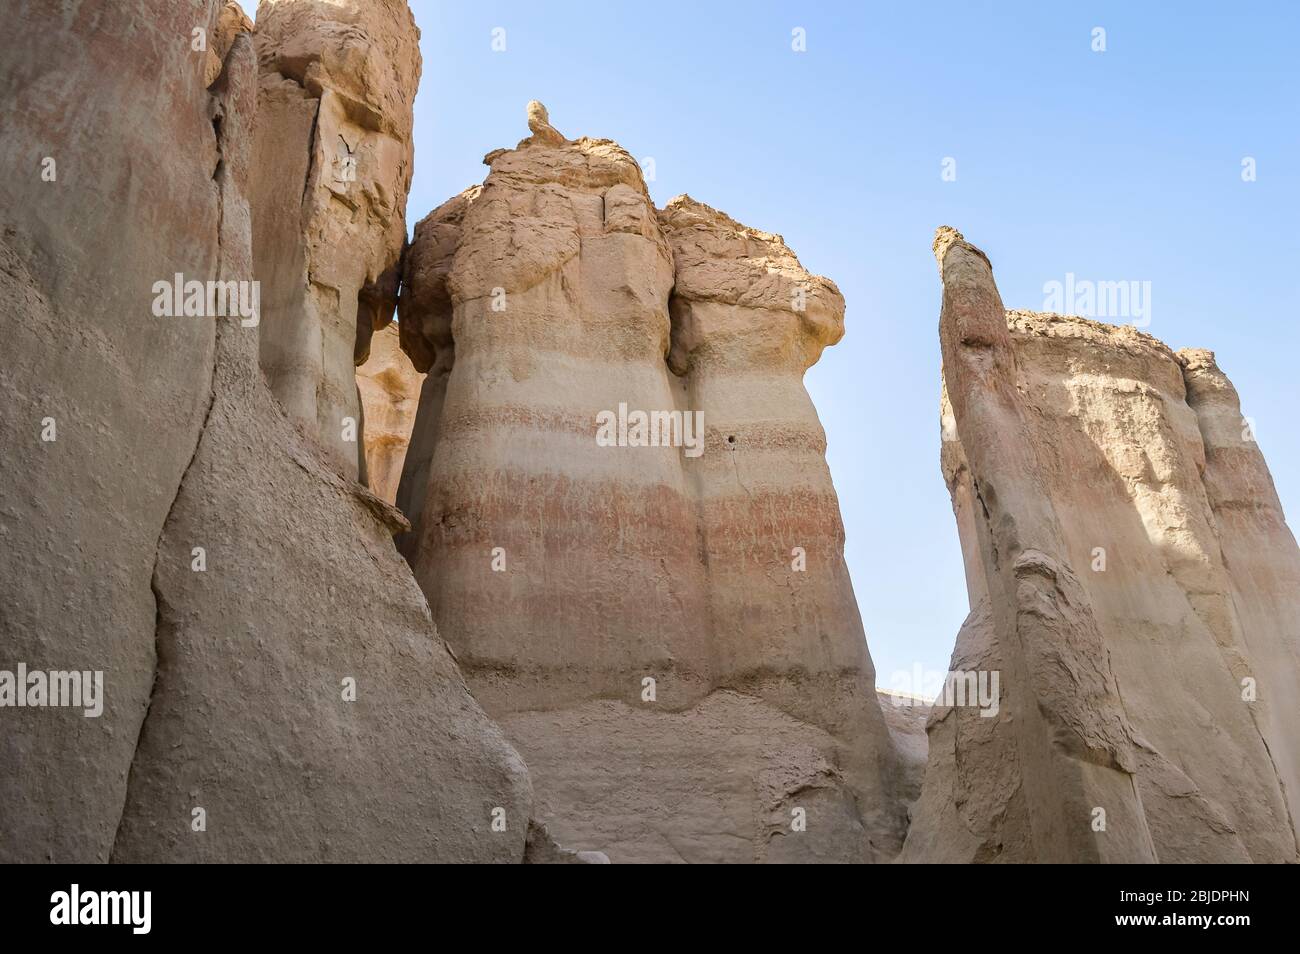 Natural formation of rocks and caves at Al Hasa eastern region of Saudi Arabia Stock Photo